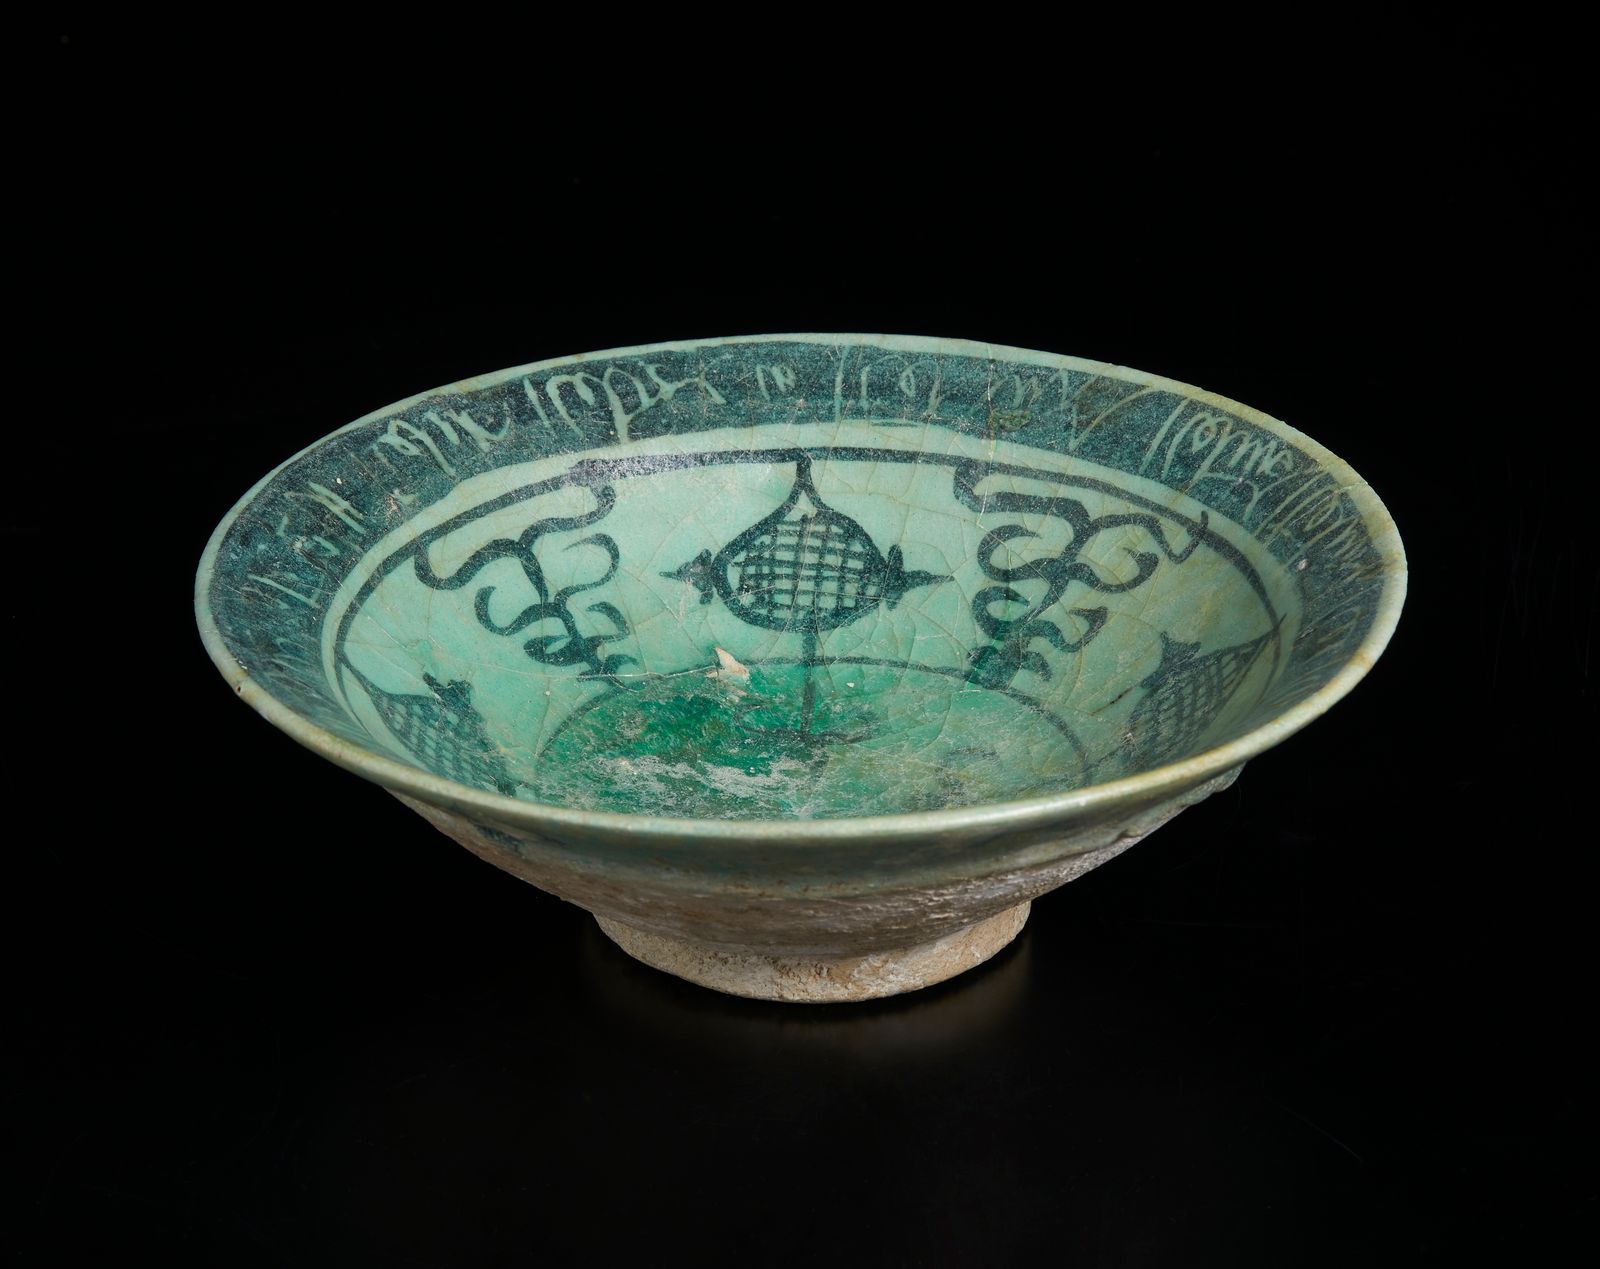 Islamic Art An underglaze decorated pottery bowl Arte islamica. Ciotola in ceram&hellip;